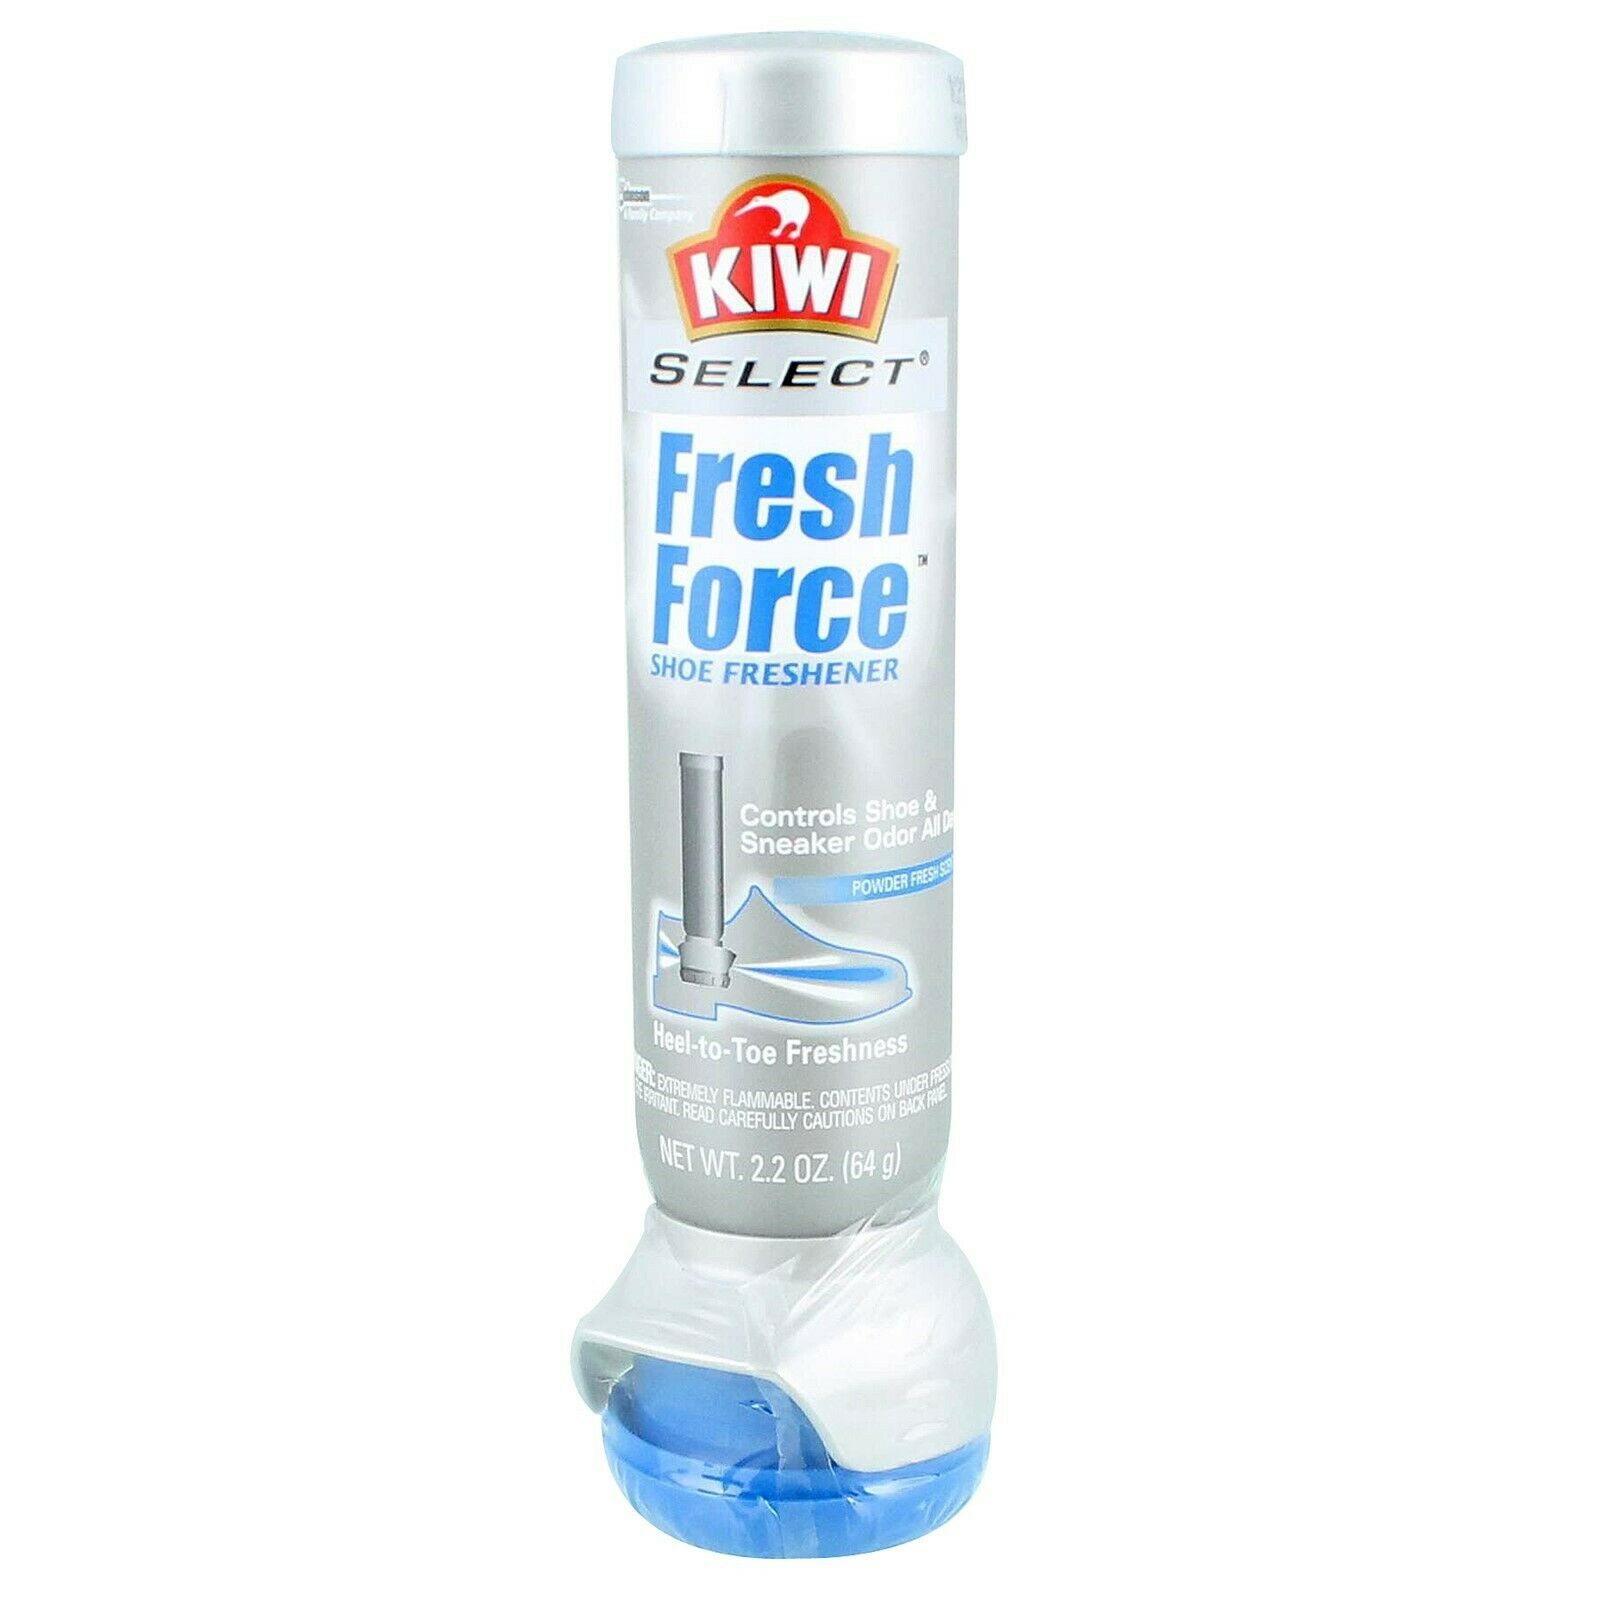 Kiwi Select, Fresh Force Shoe Freshener Deodorant